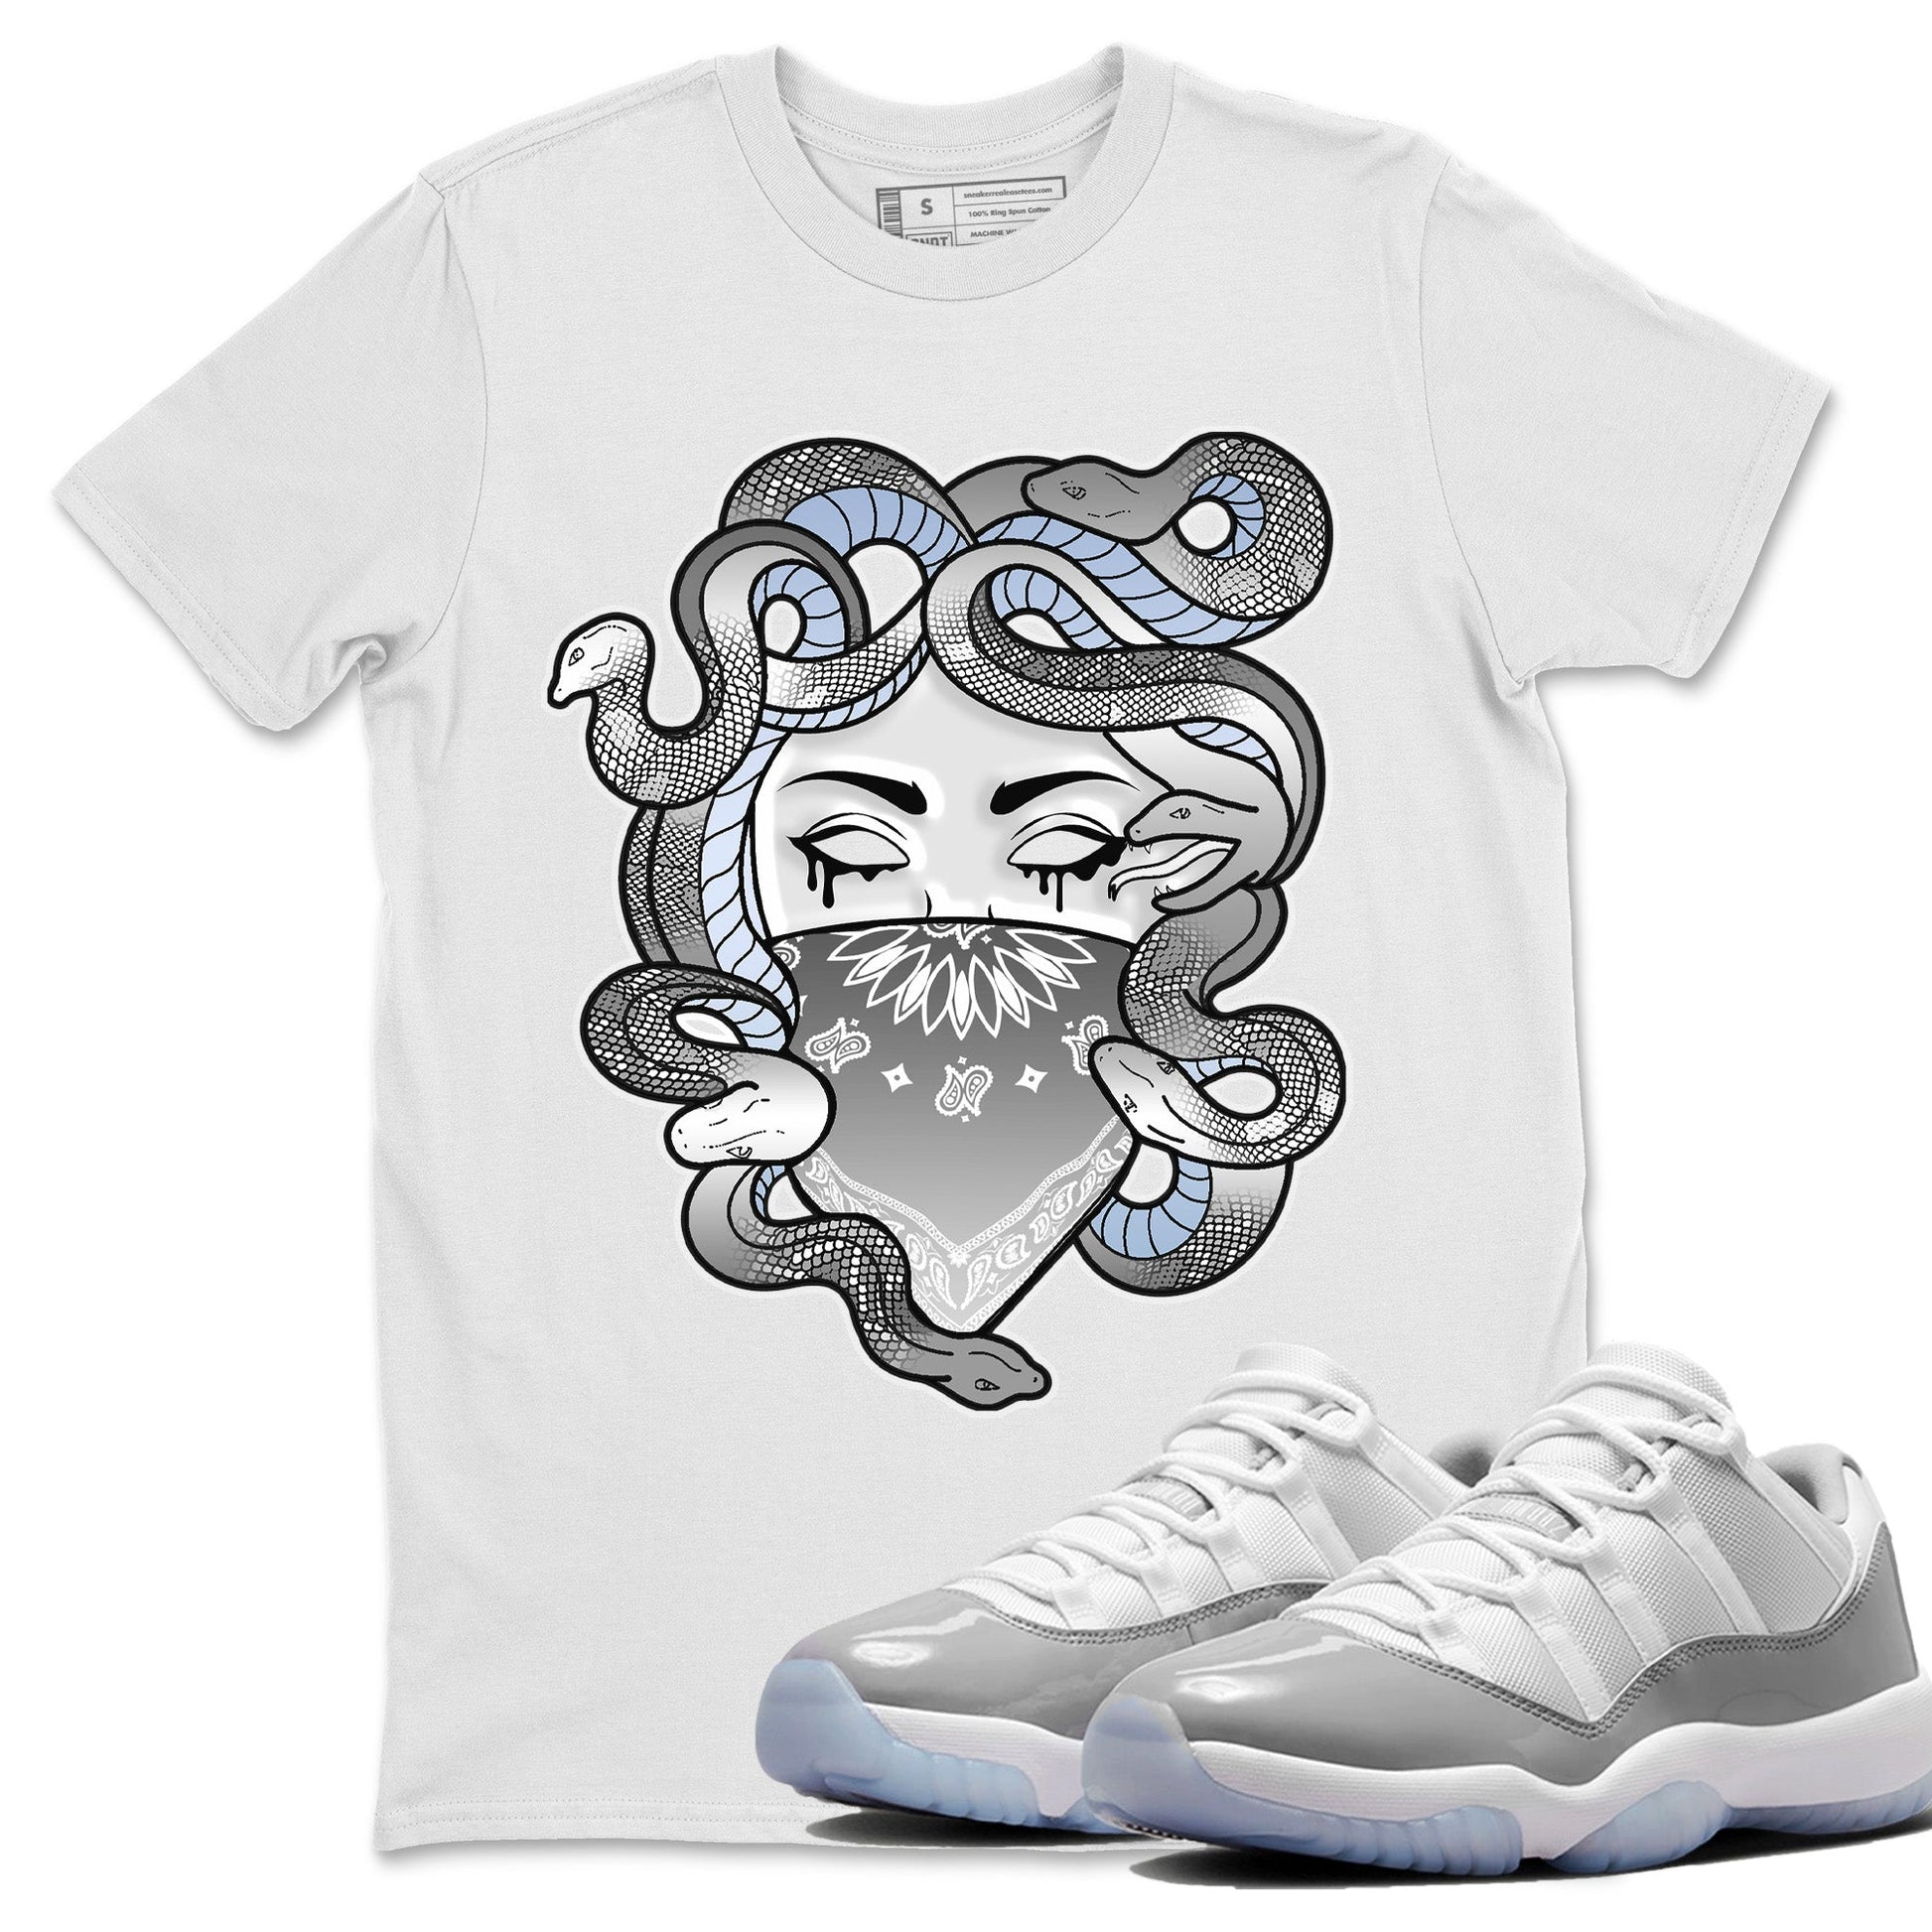 Air Jordan 11 White Cement Sneaker Match Tees Medusa Sneaker Tees Air Jordan 11 Cement Grey Sneaker Release Tees Unisex Shirts White 1